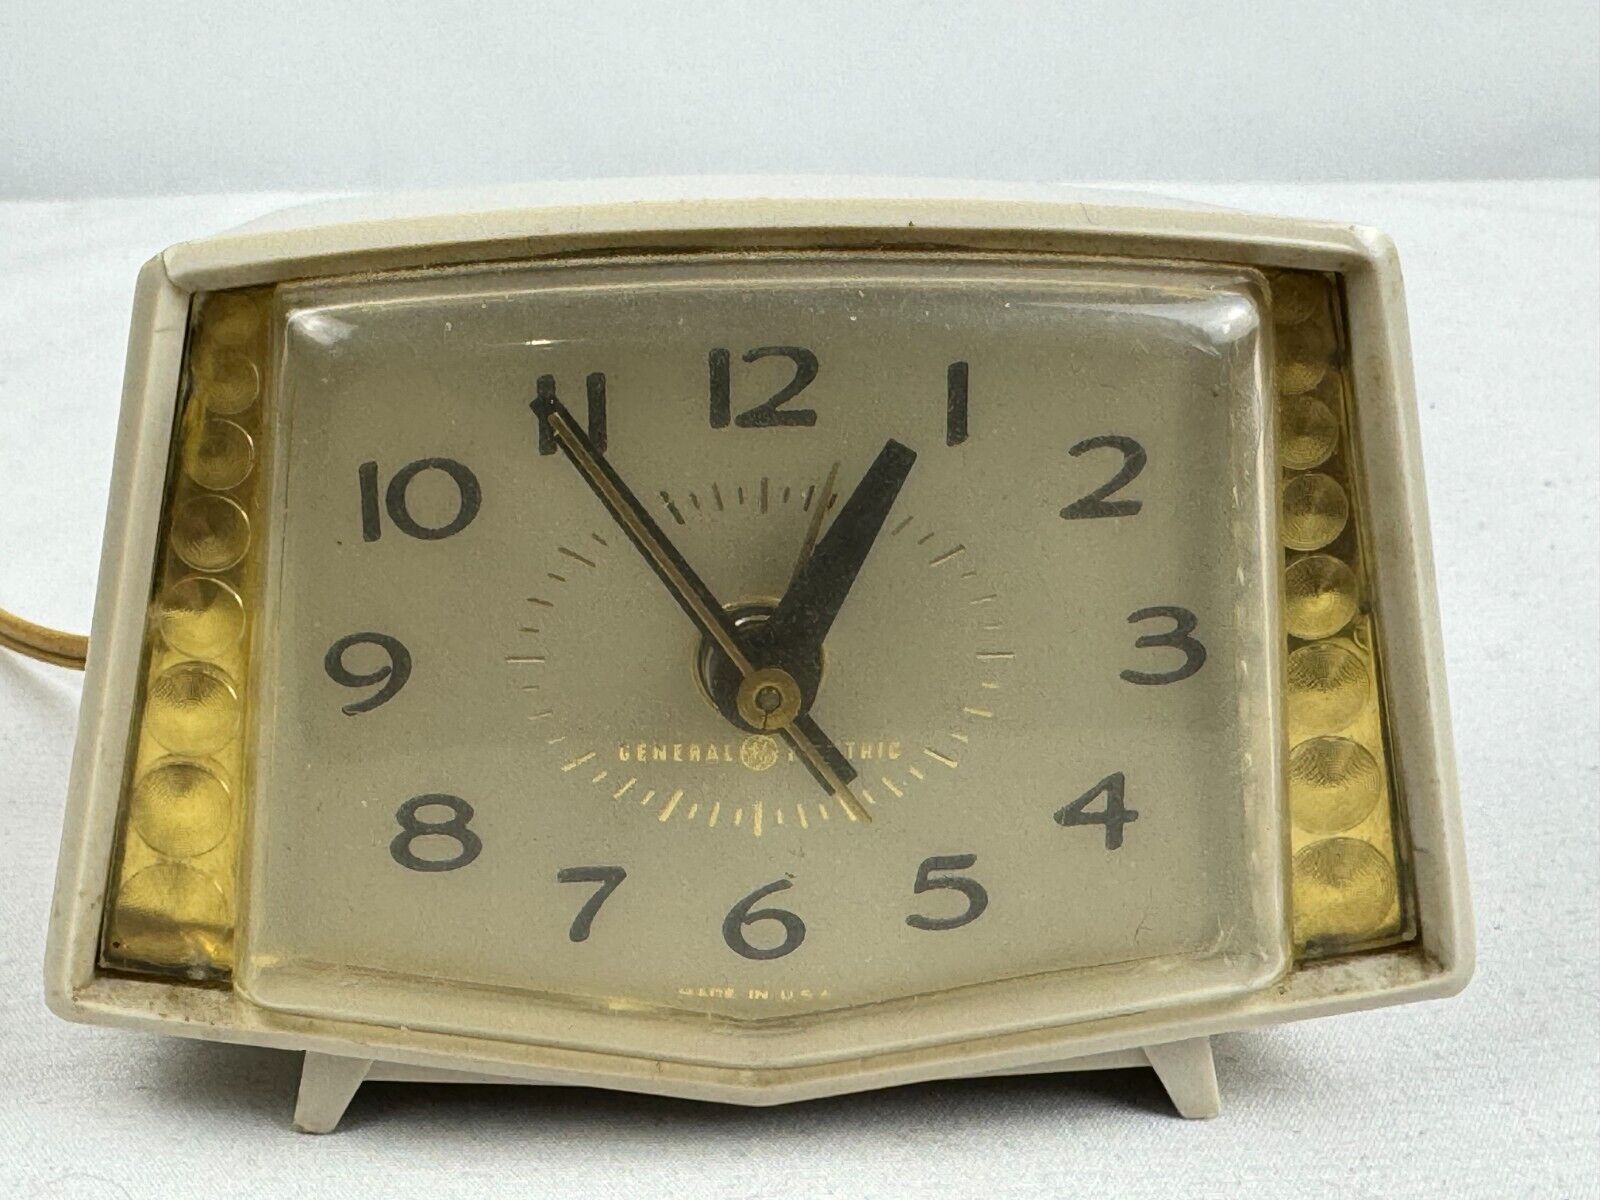 Vintage General Electric Alarm Clock 7281 Mid Century Futuristic Look Tested